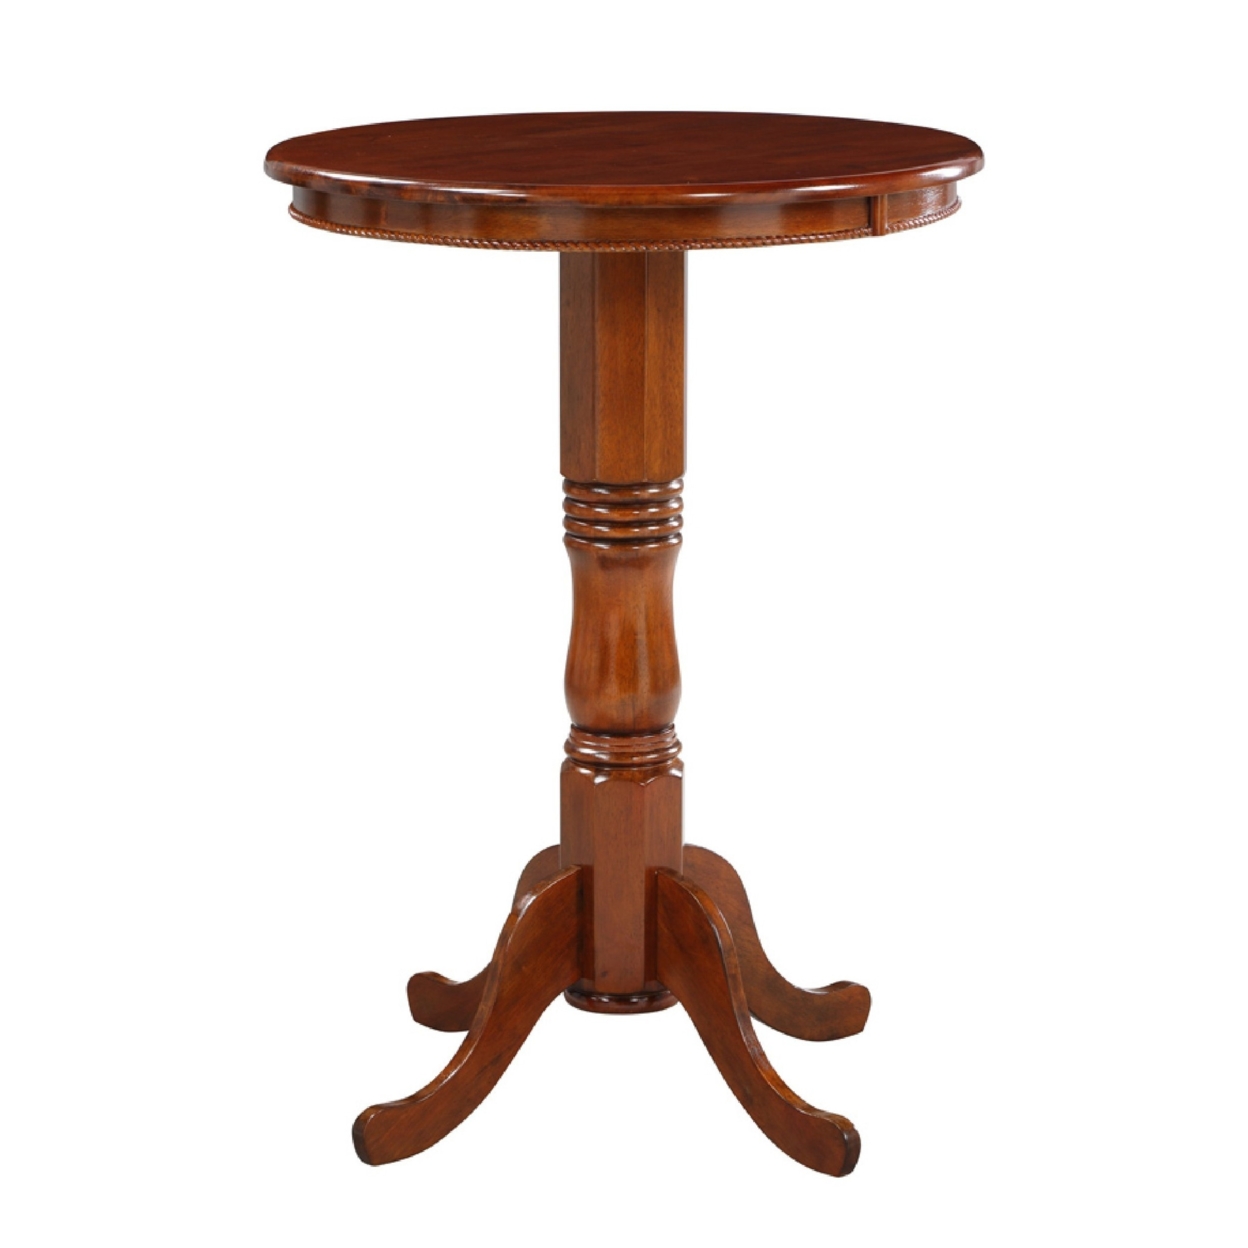 32 Inch Round Pub Bar Table, Classic Turned Pedestal, MDF Wood, Walnut Brown- Saltoro Sherpi